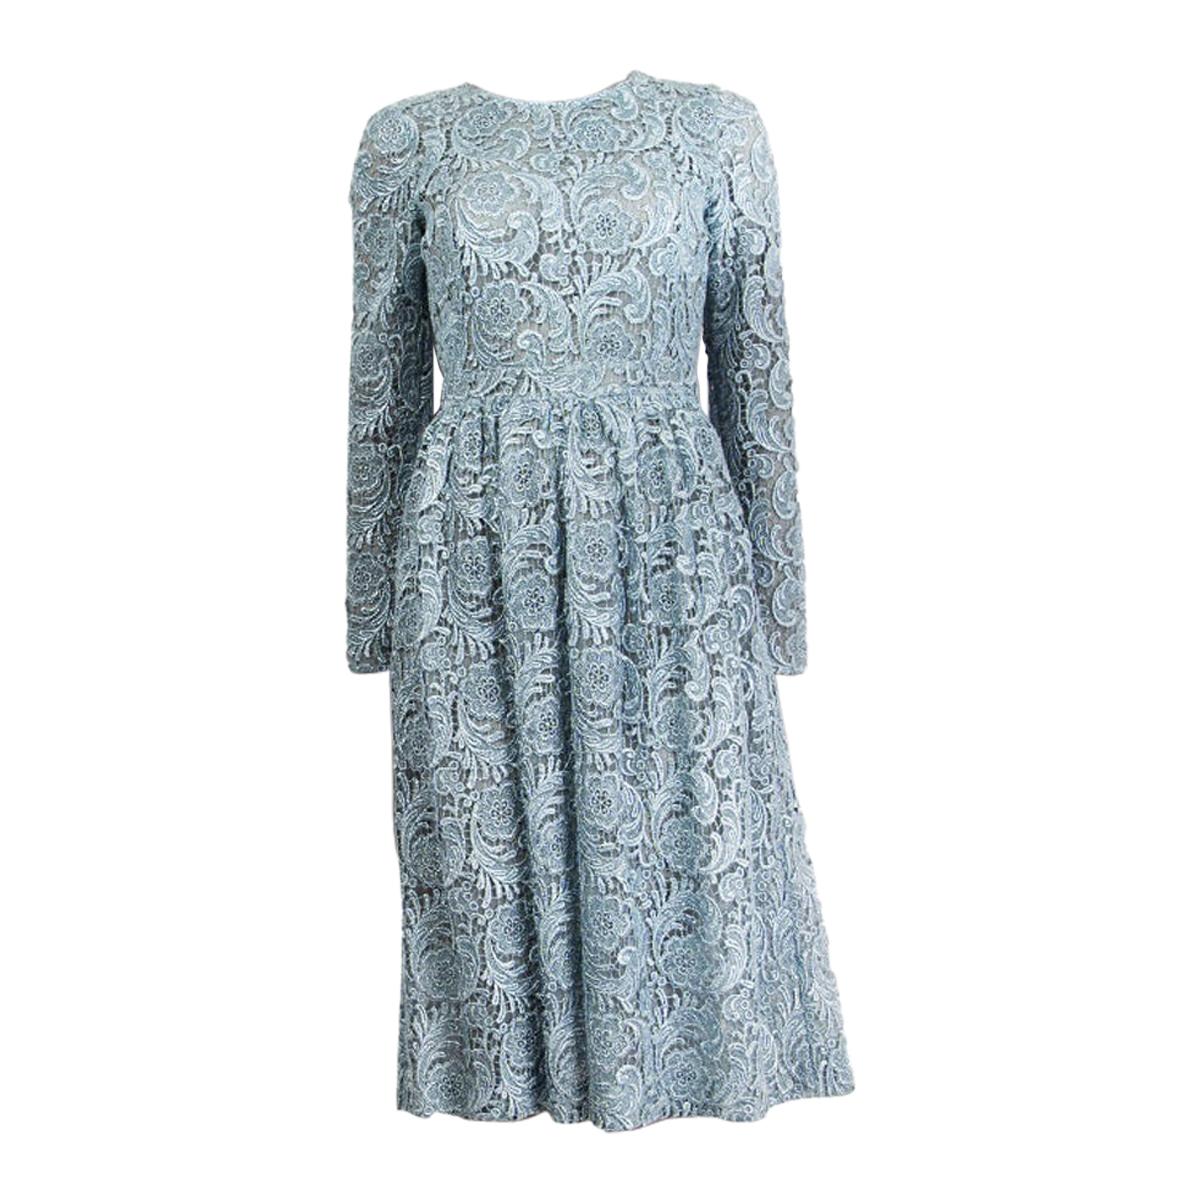 PRADA ice blue EMBROIDERED LACE Long Sleeve Dress 38